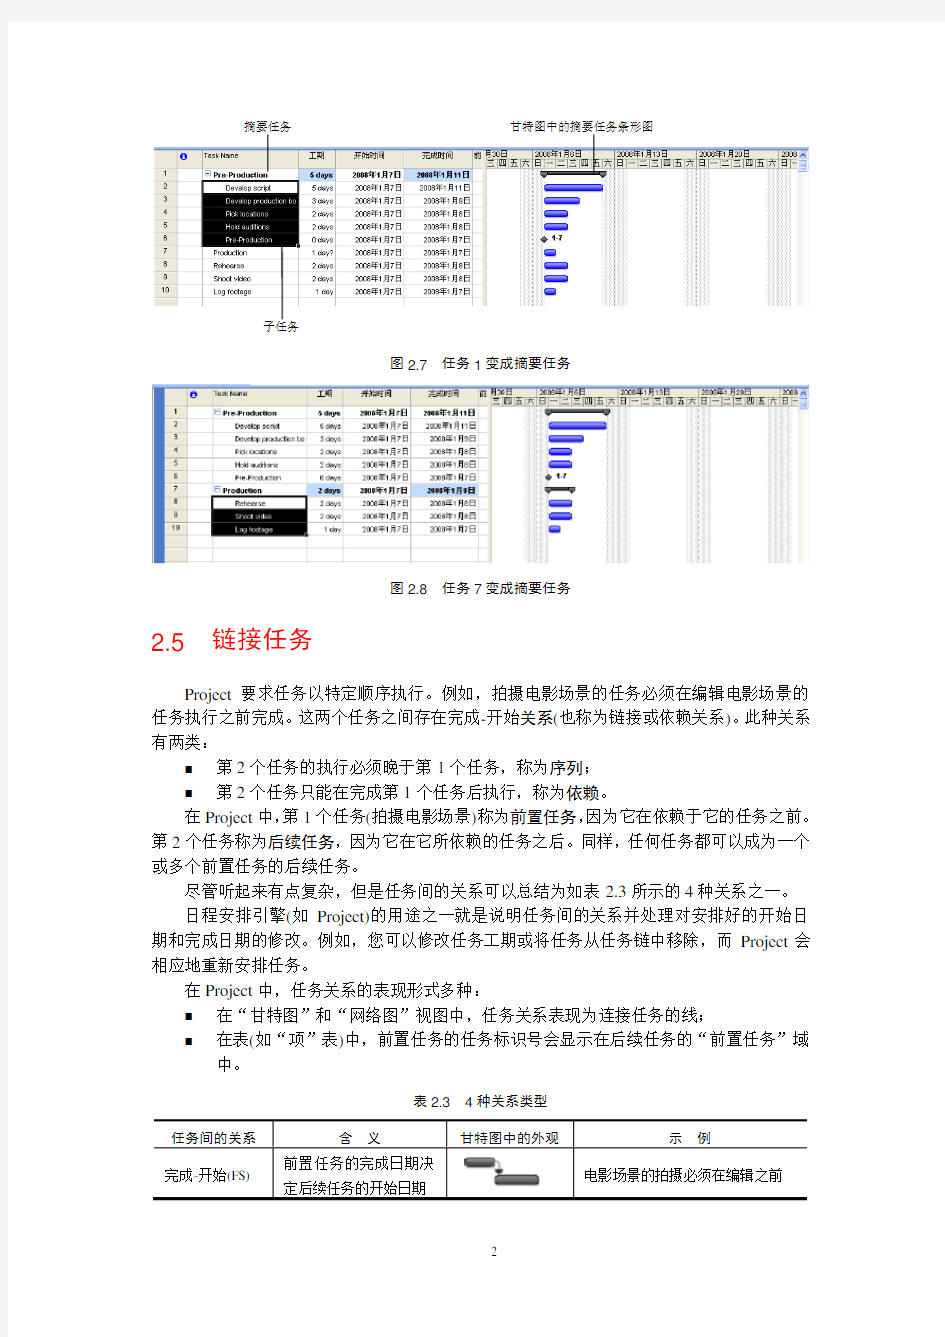 project_2007图文教程(中)